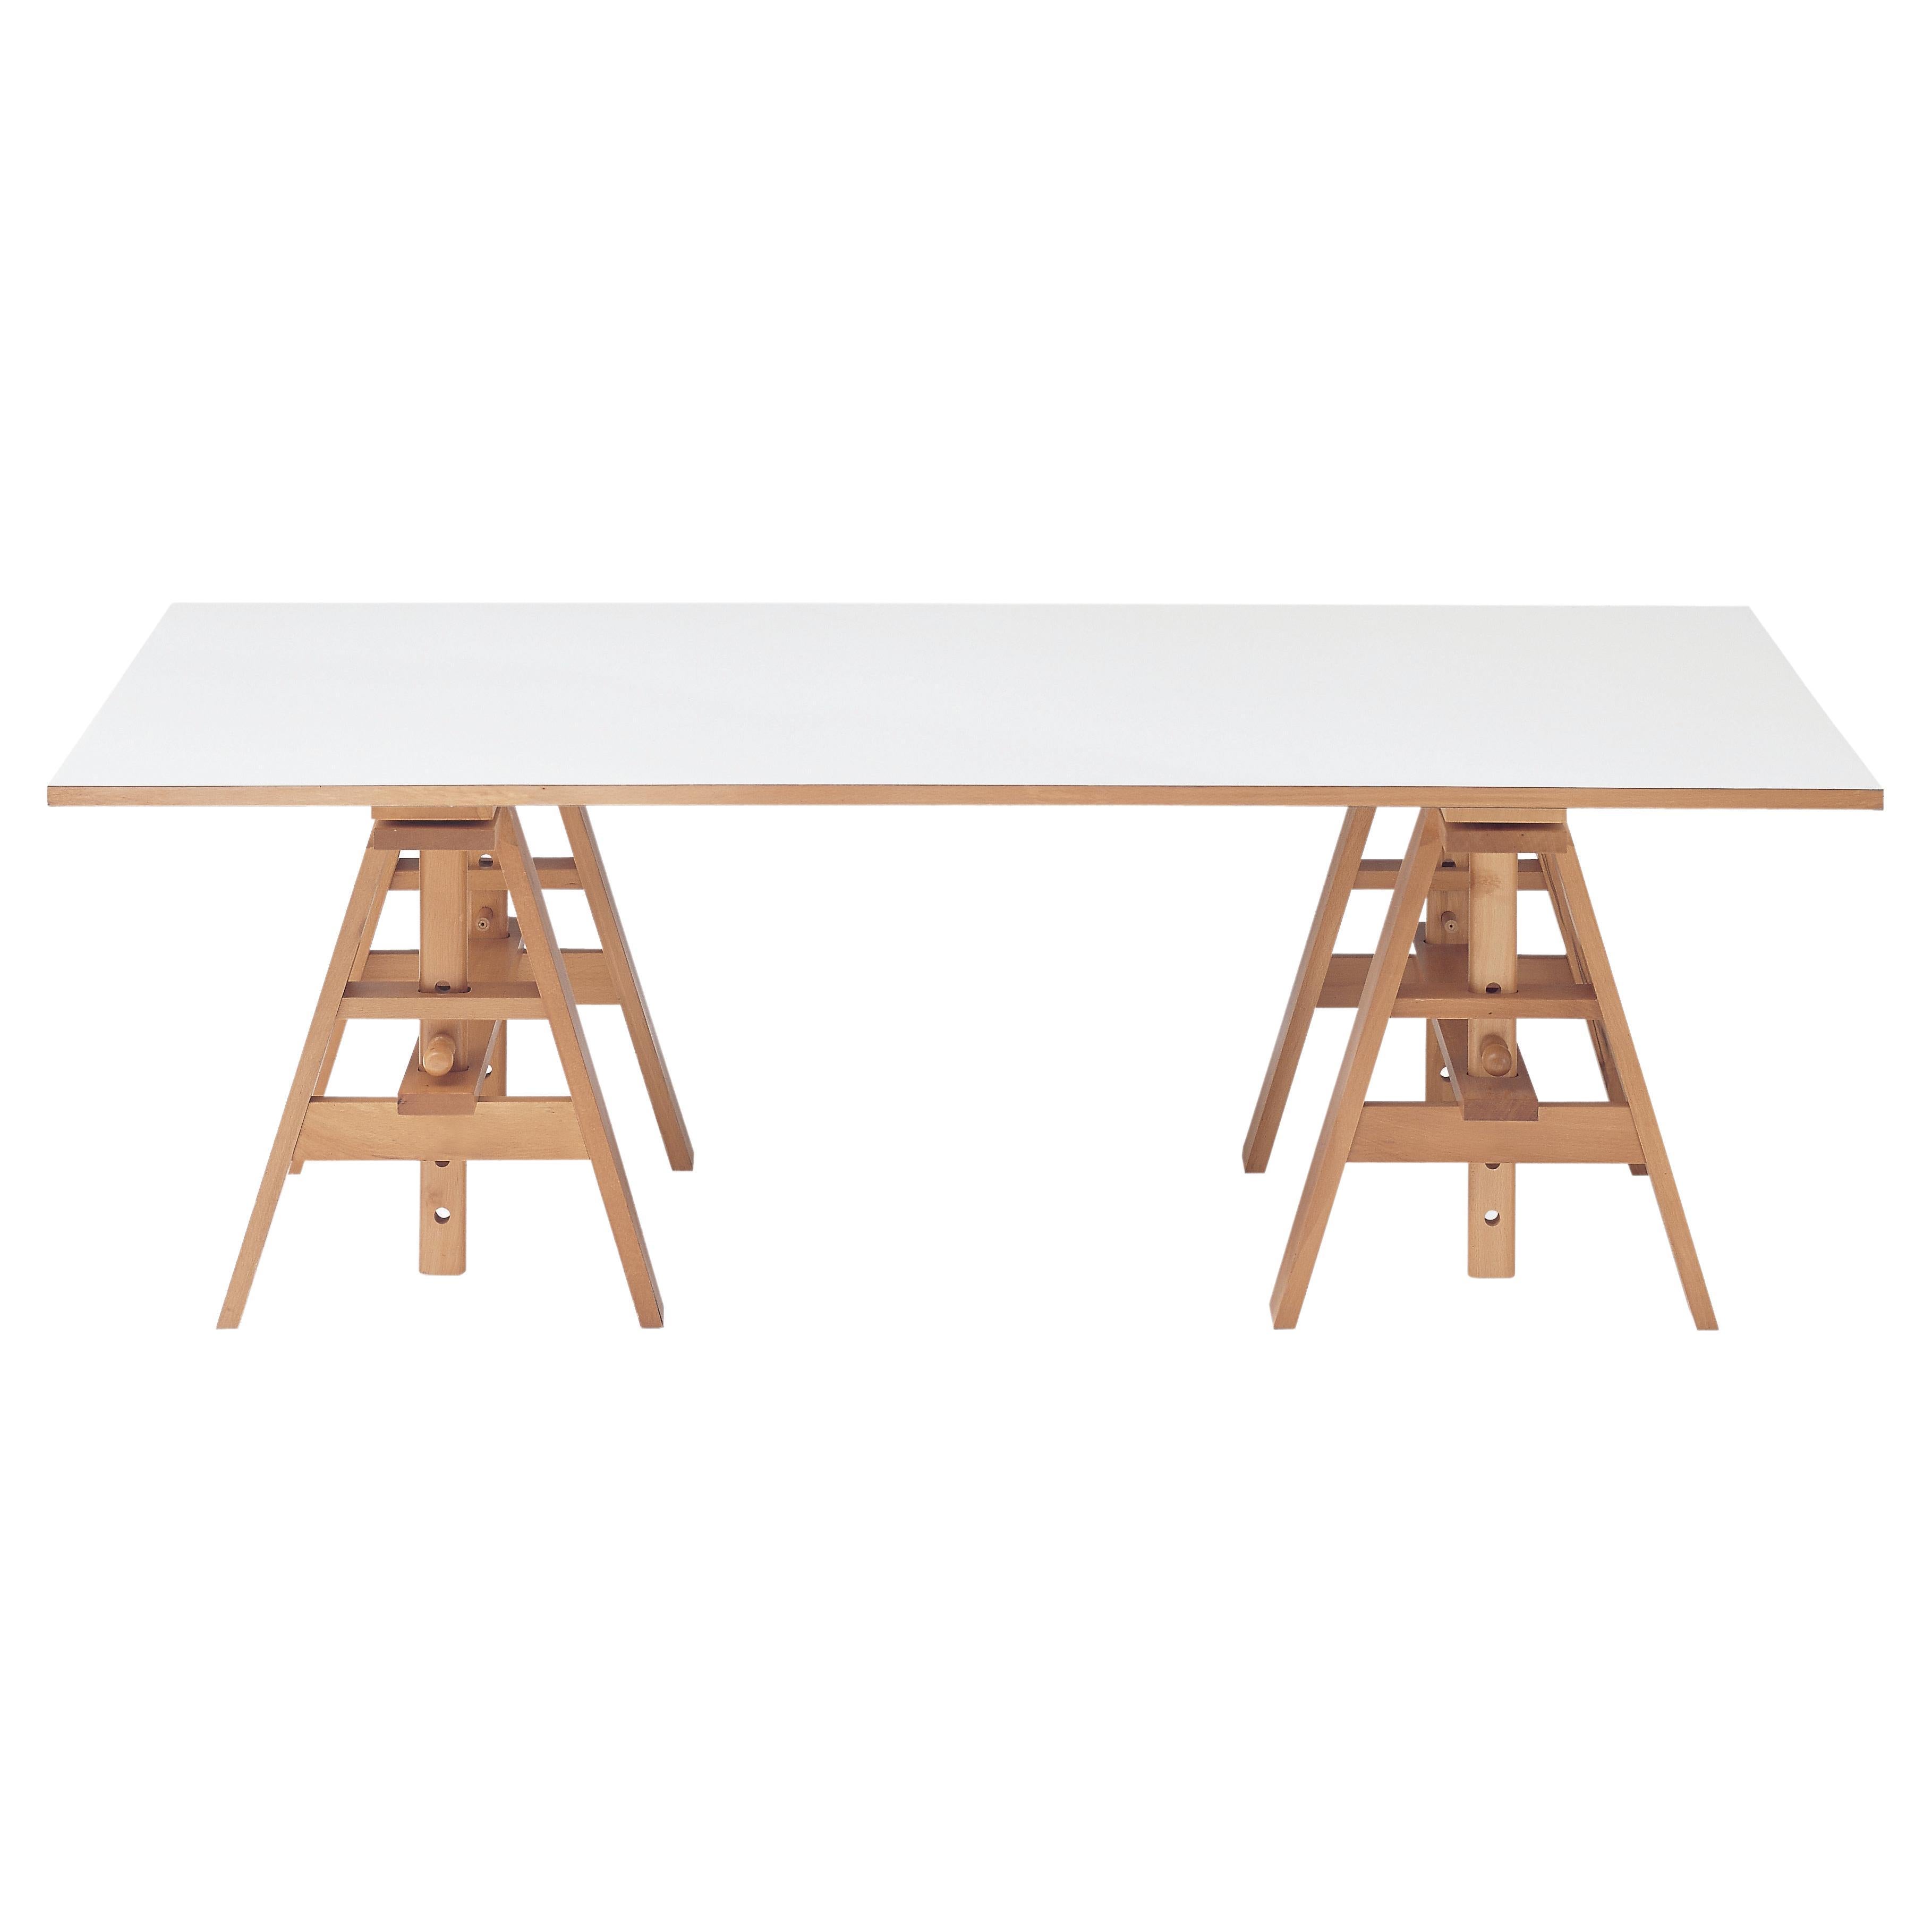 Zanotta Leonardo Working Table in Laminated Top & Natural Varnished Beech Frame